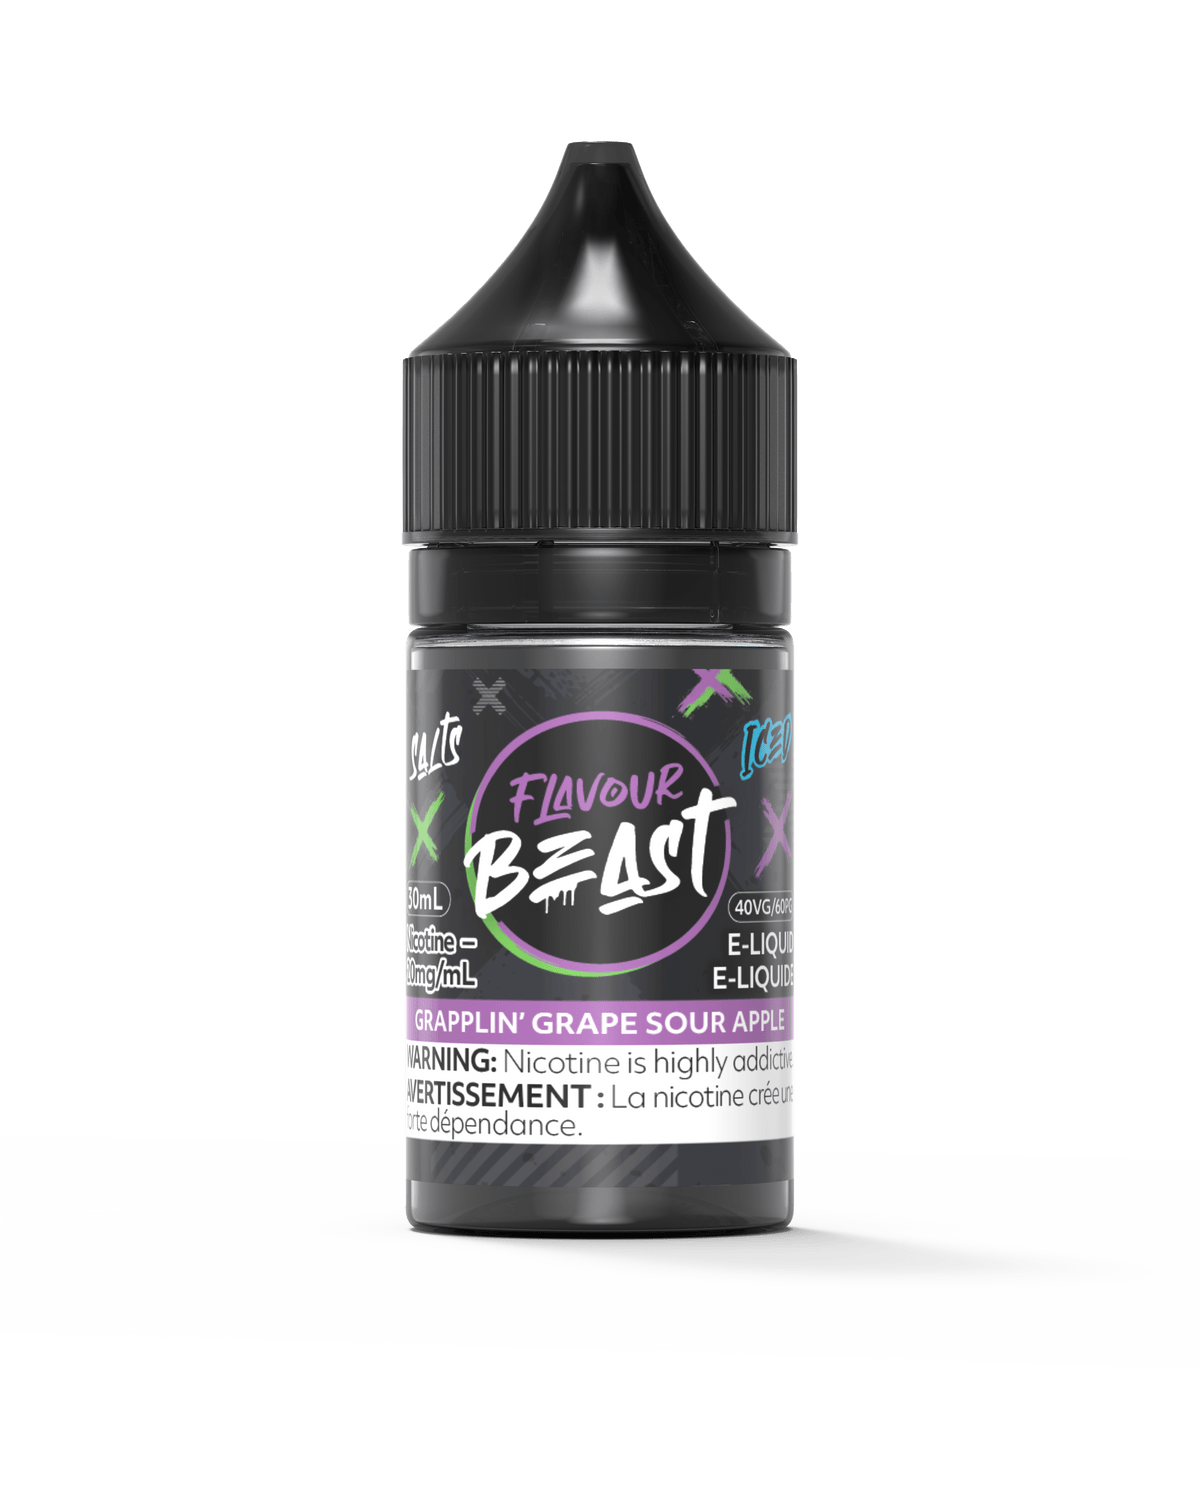 Flavour Beast Salt - Grapplin' Grape Sour Apple Iced Nic Salt E-Liquid available on Canada online vape shop